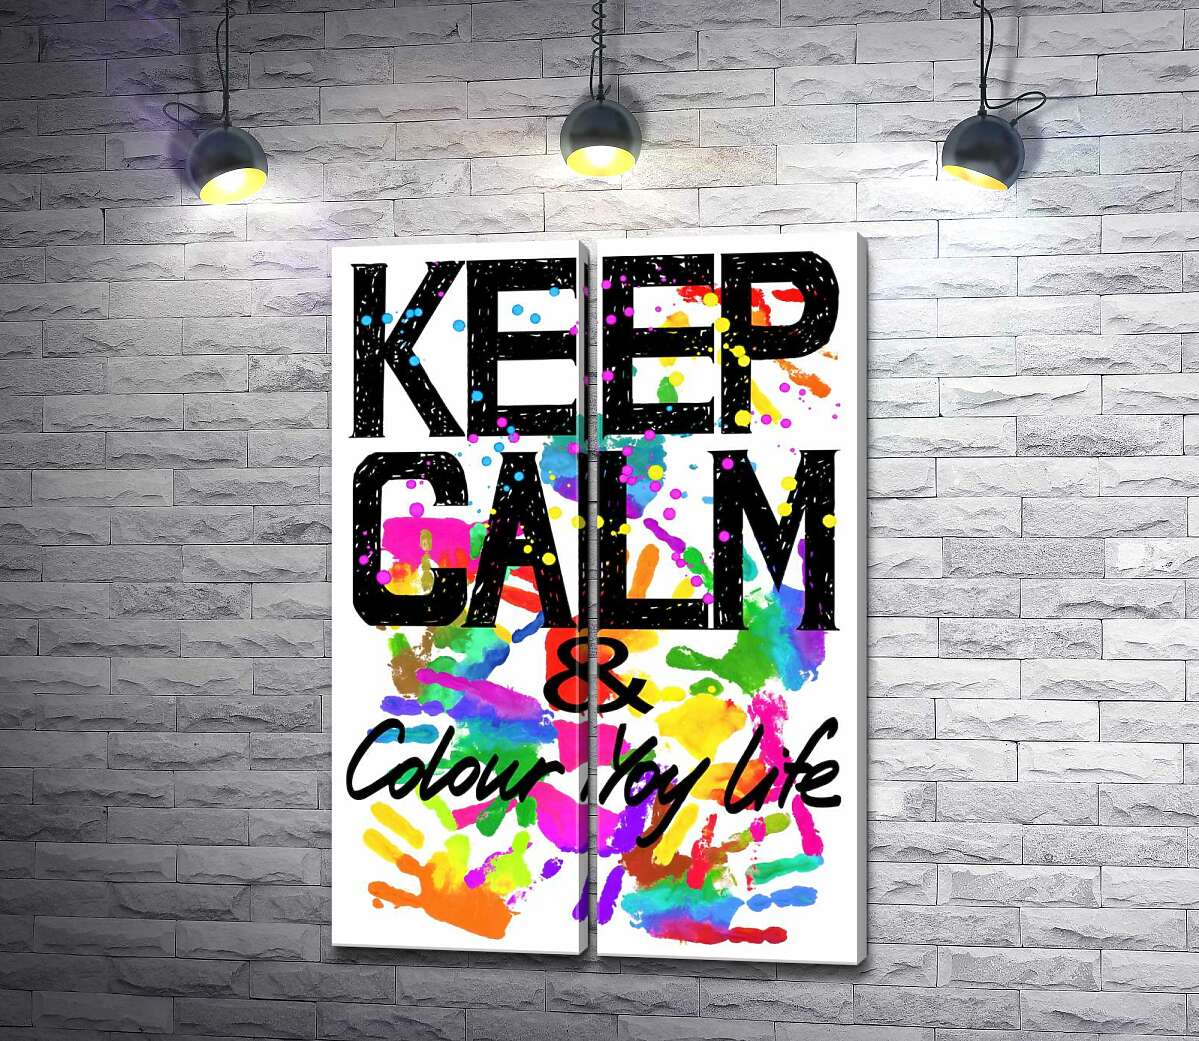 модульная картина Надпись "keep calm and colour your life" на фоне отпечатков рук